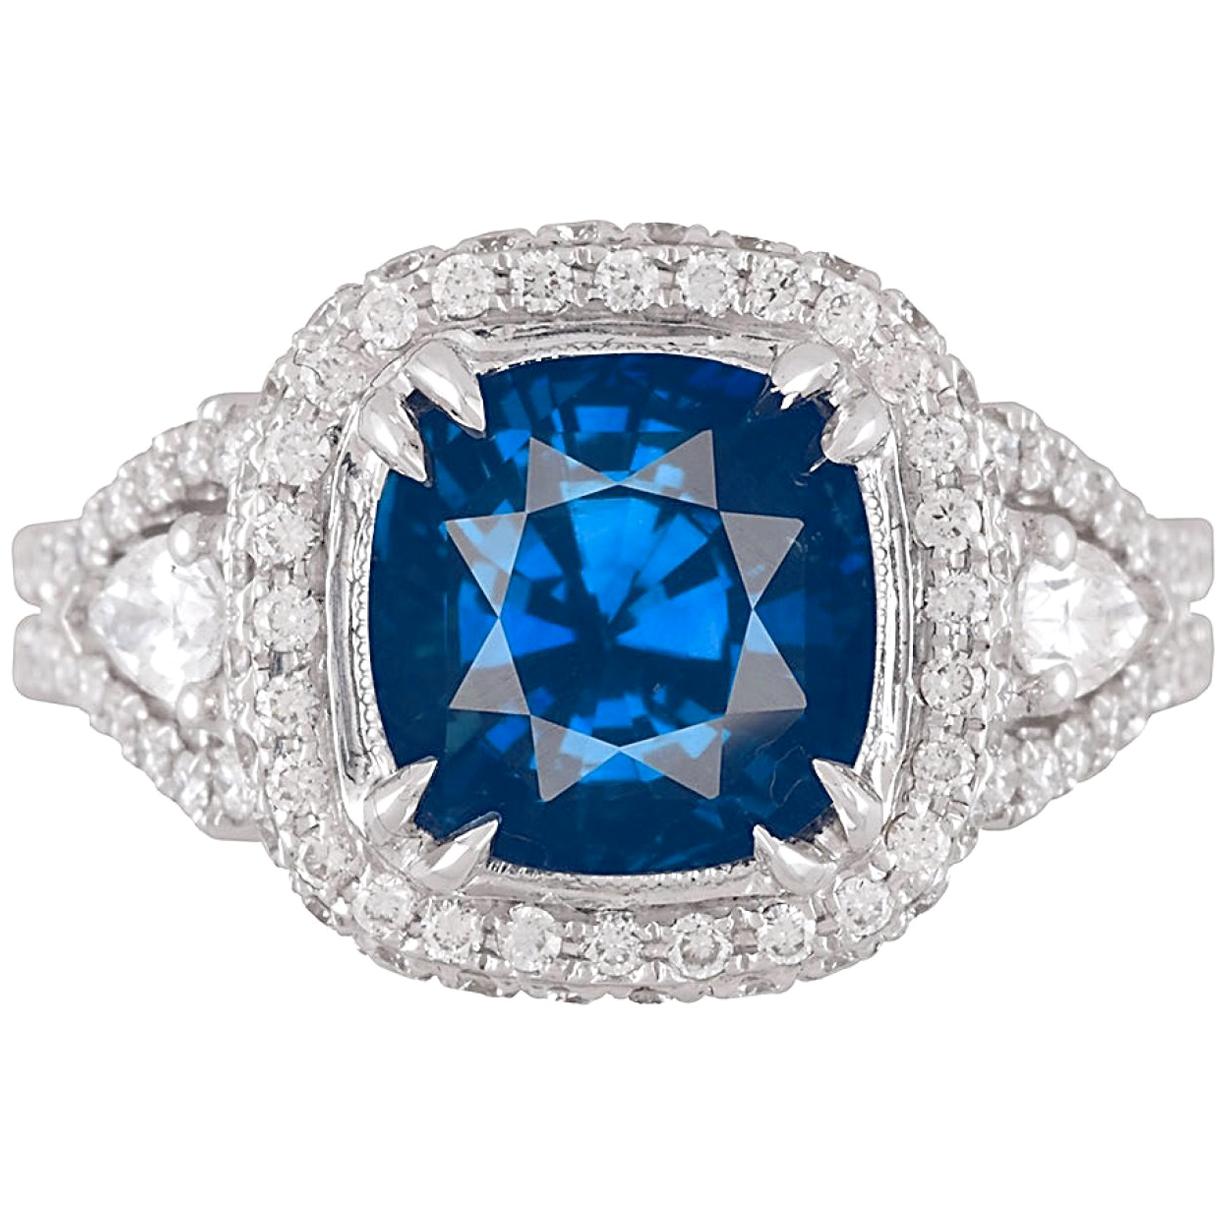 GIA Certified 3.59 Carat Cushion Cut Blue Sapphire and Diamond Ring